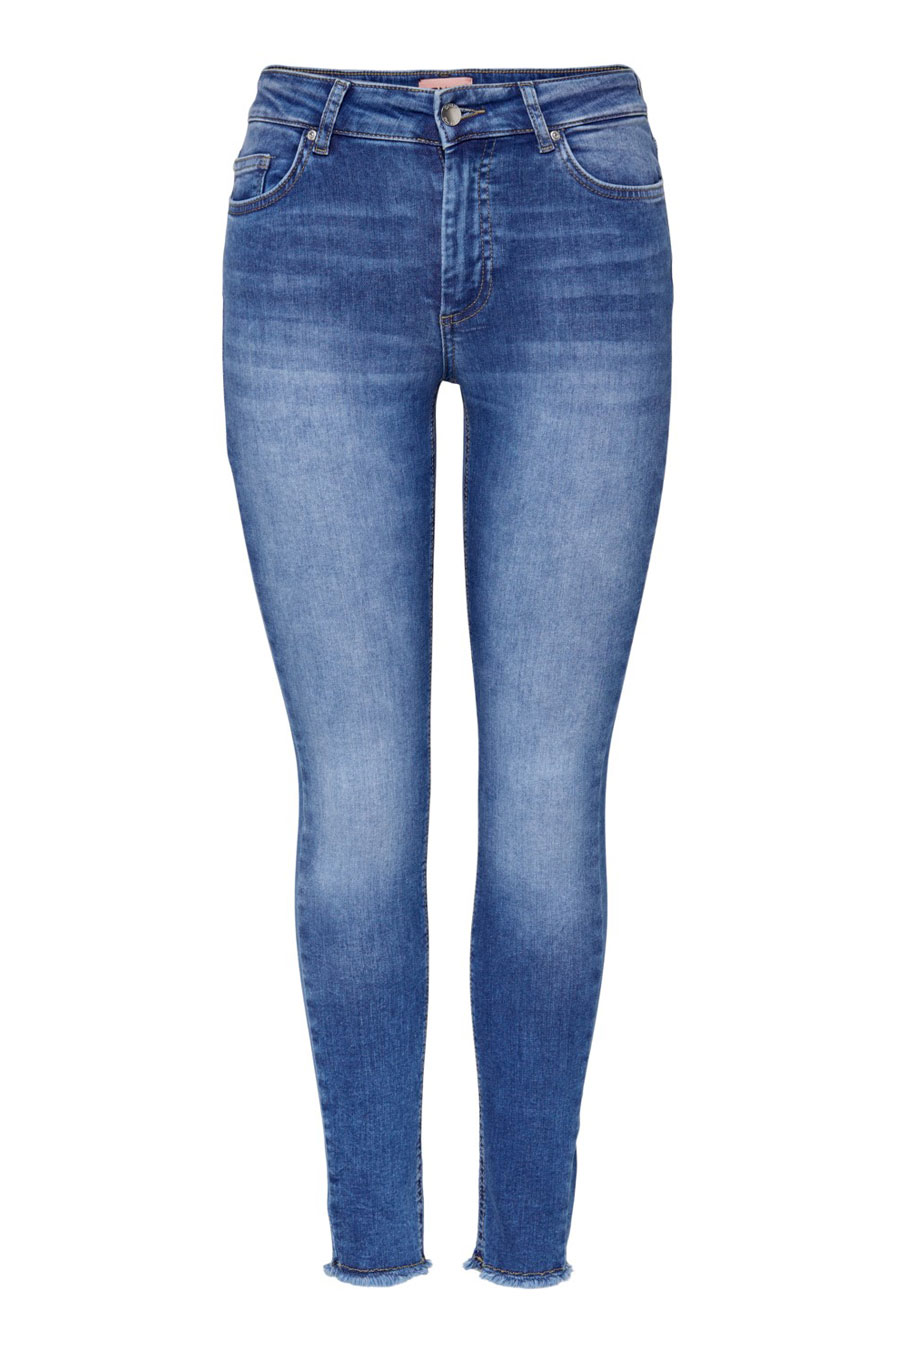 T 34-36 blau Damen Kleidung Only Damen Jeans Only Damen Skinny Jeans Only Damen Skinny Jeans ONLY W26 Skinny Jeans Only Damen 